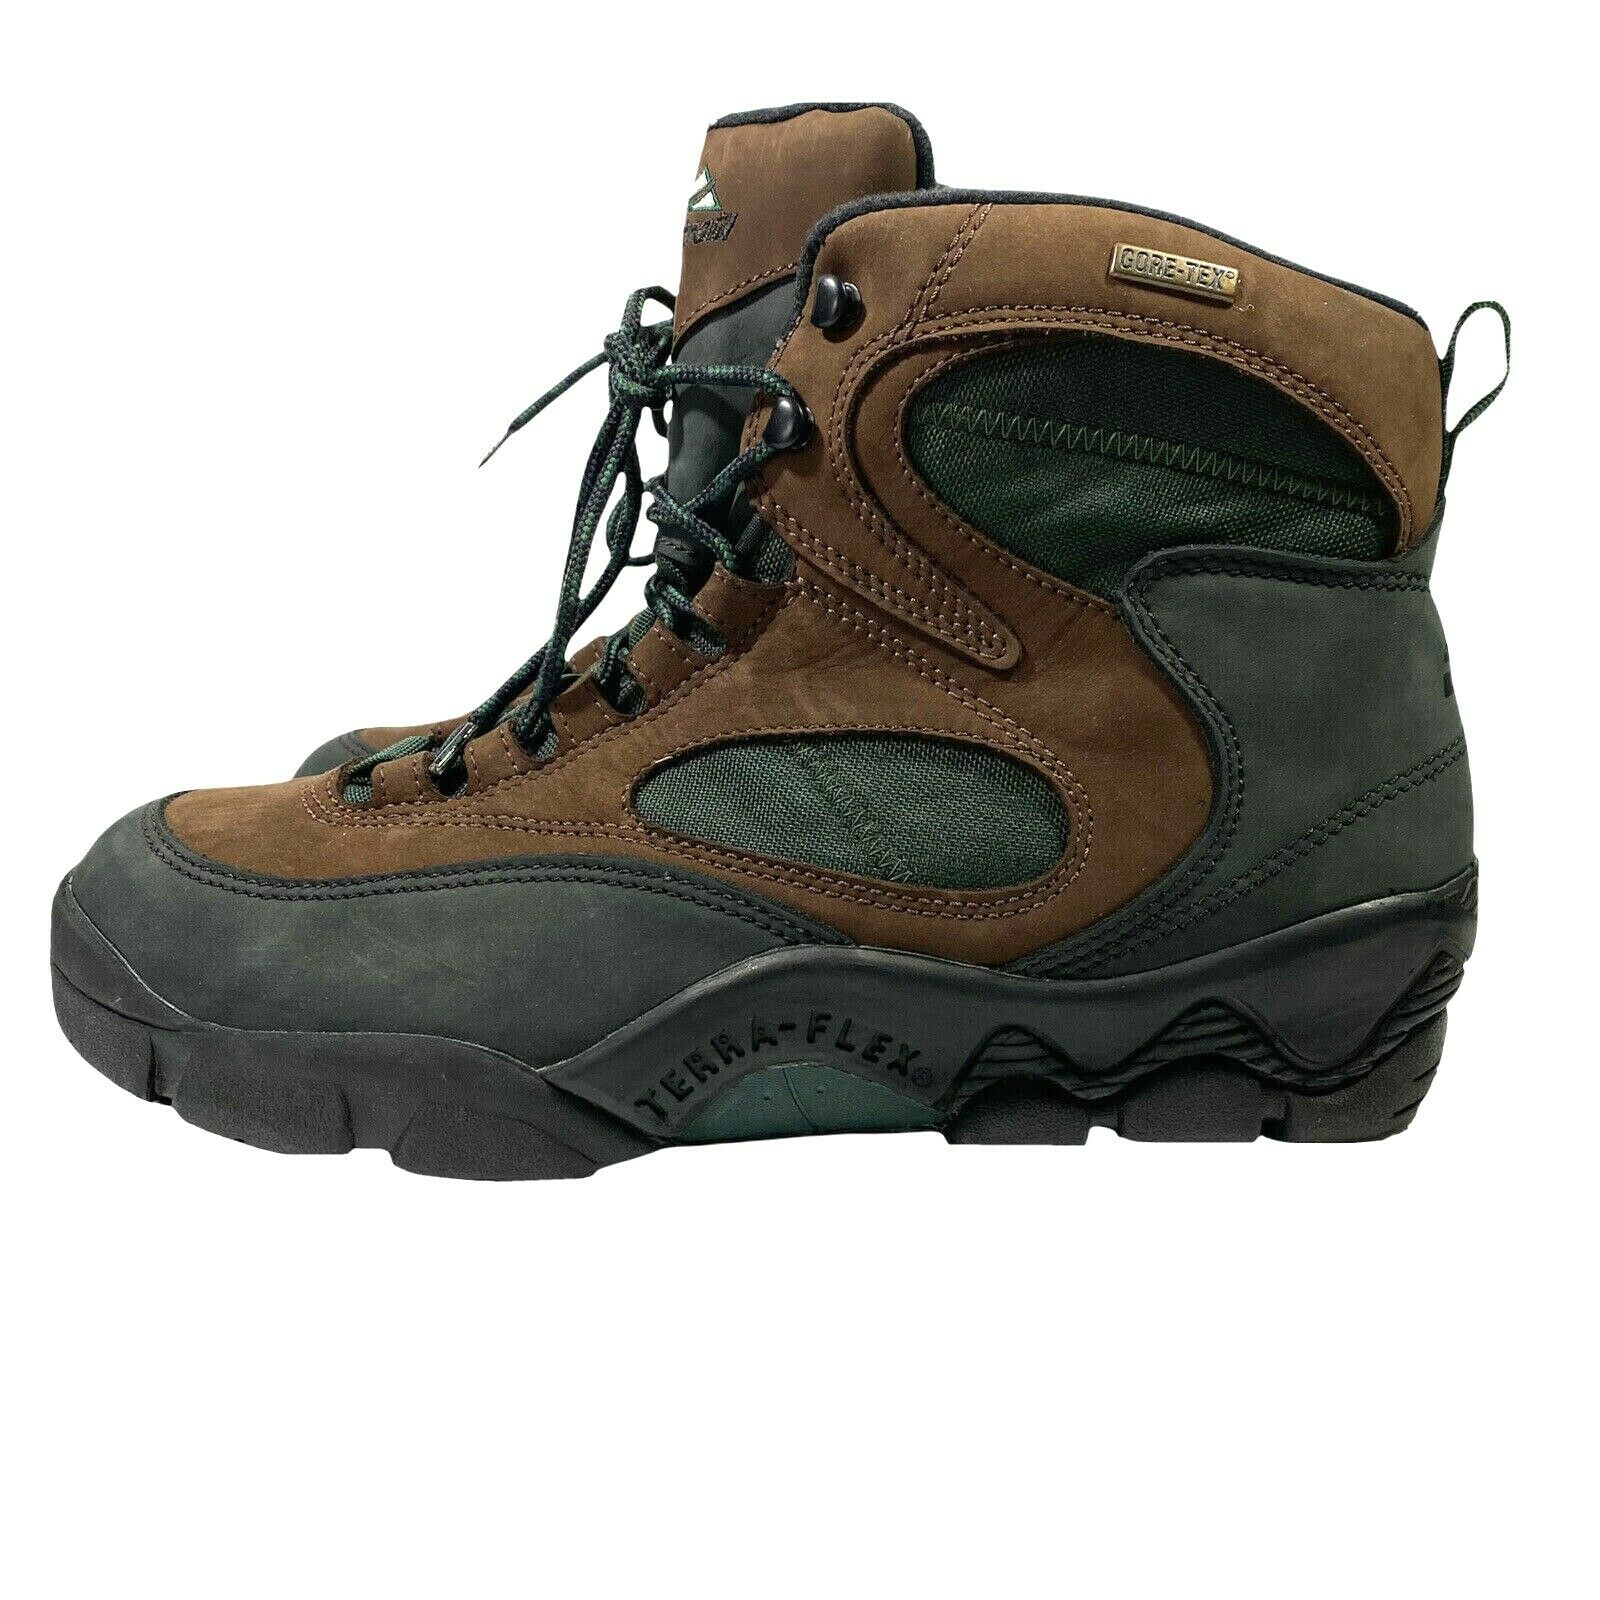 MONTRAIL Men's Size US14 GORE-TEX Leather Hiking Brown & Black Boots TERRA-FLEX.